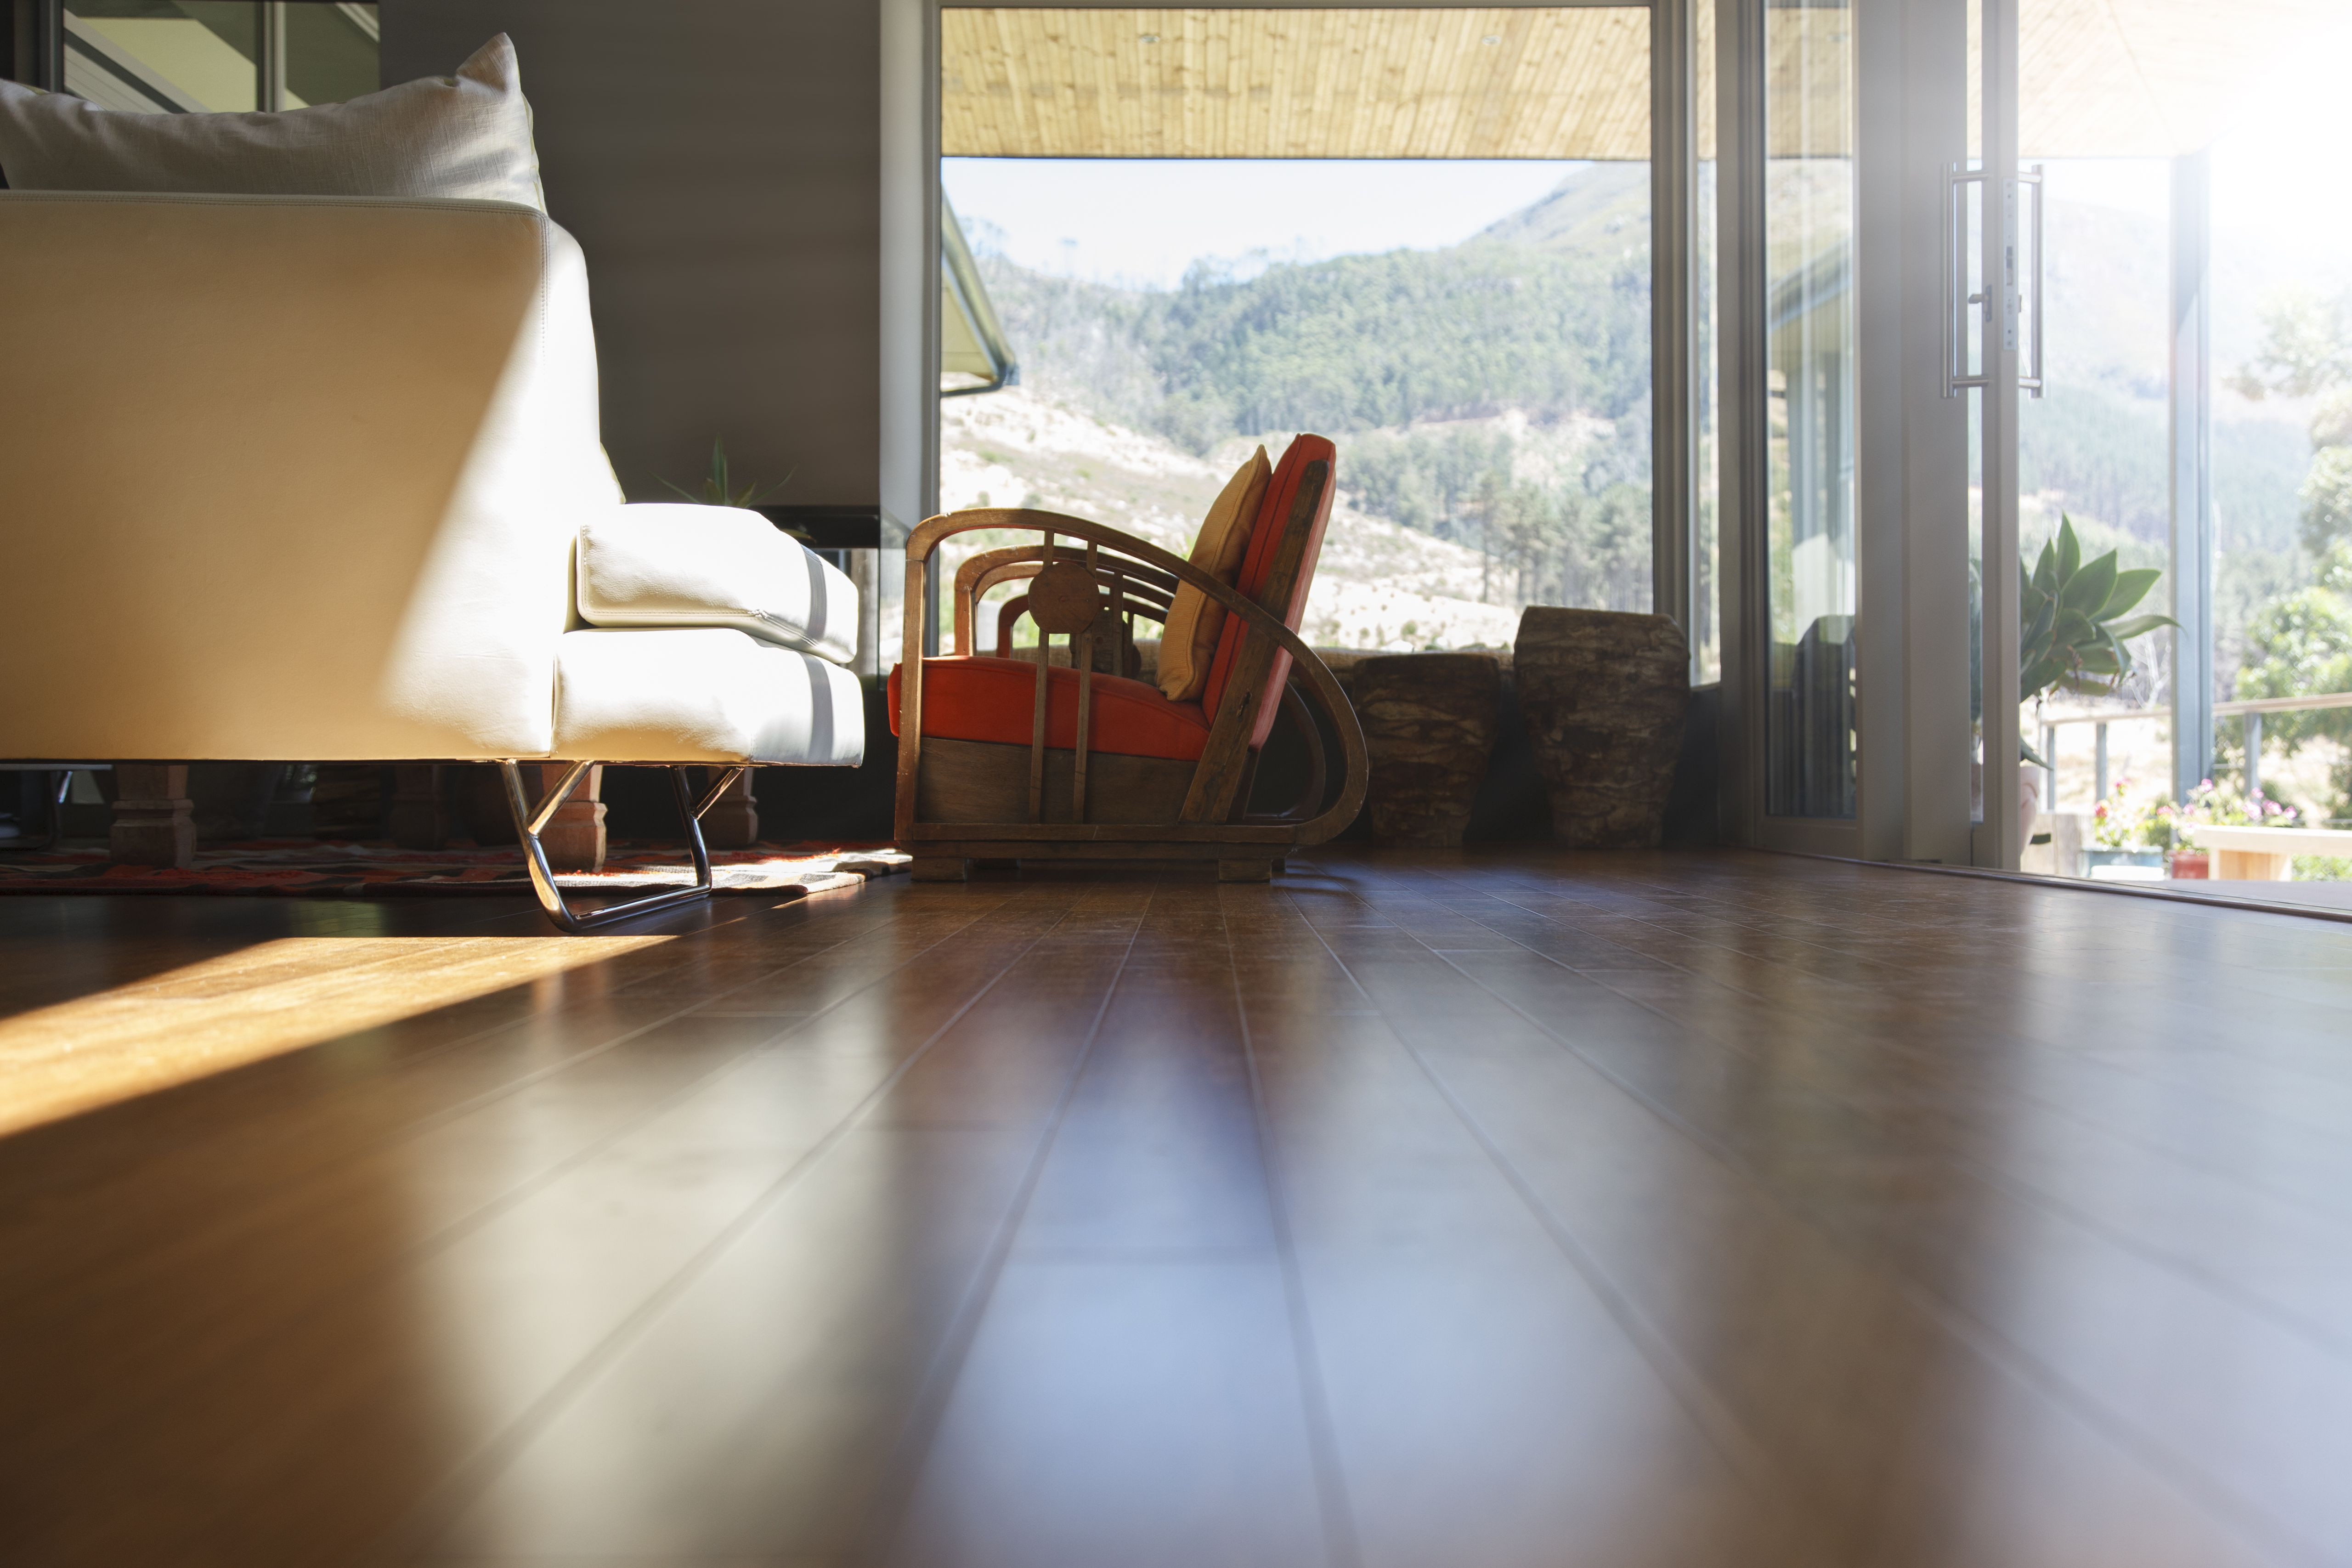 hardwood floor store inc of a vinyl plank flooring guide in living room interior hard wood floor and sofa 525439899 57e95e215f9b586c359d5ab1